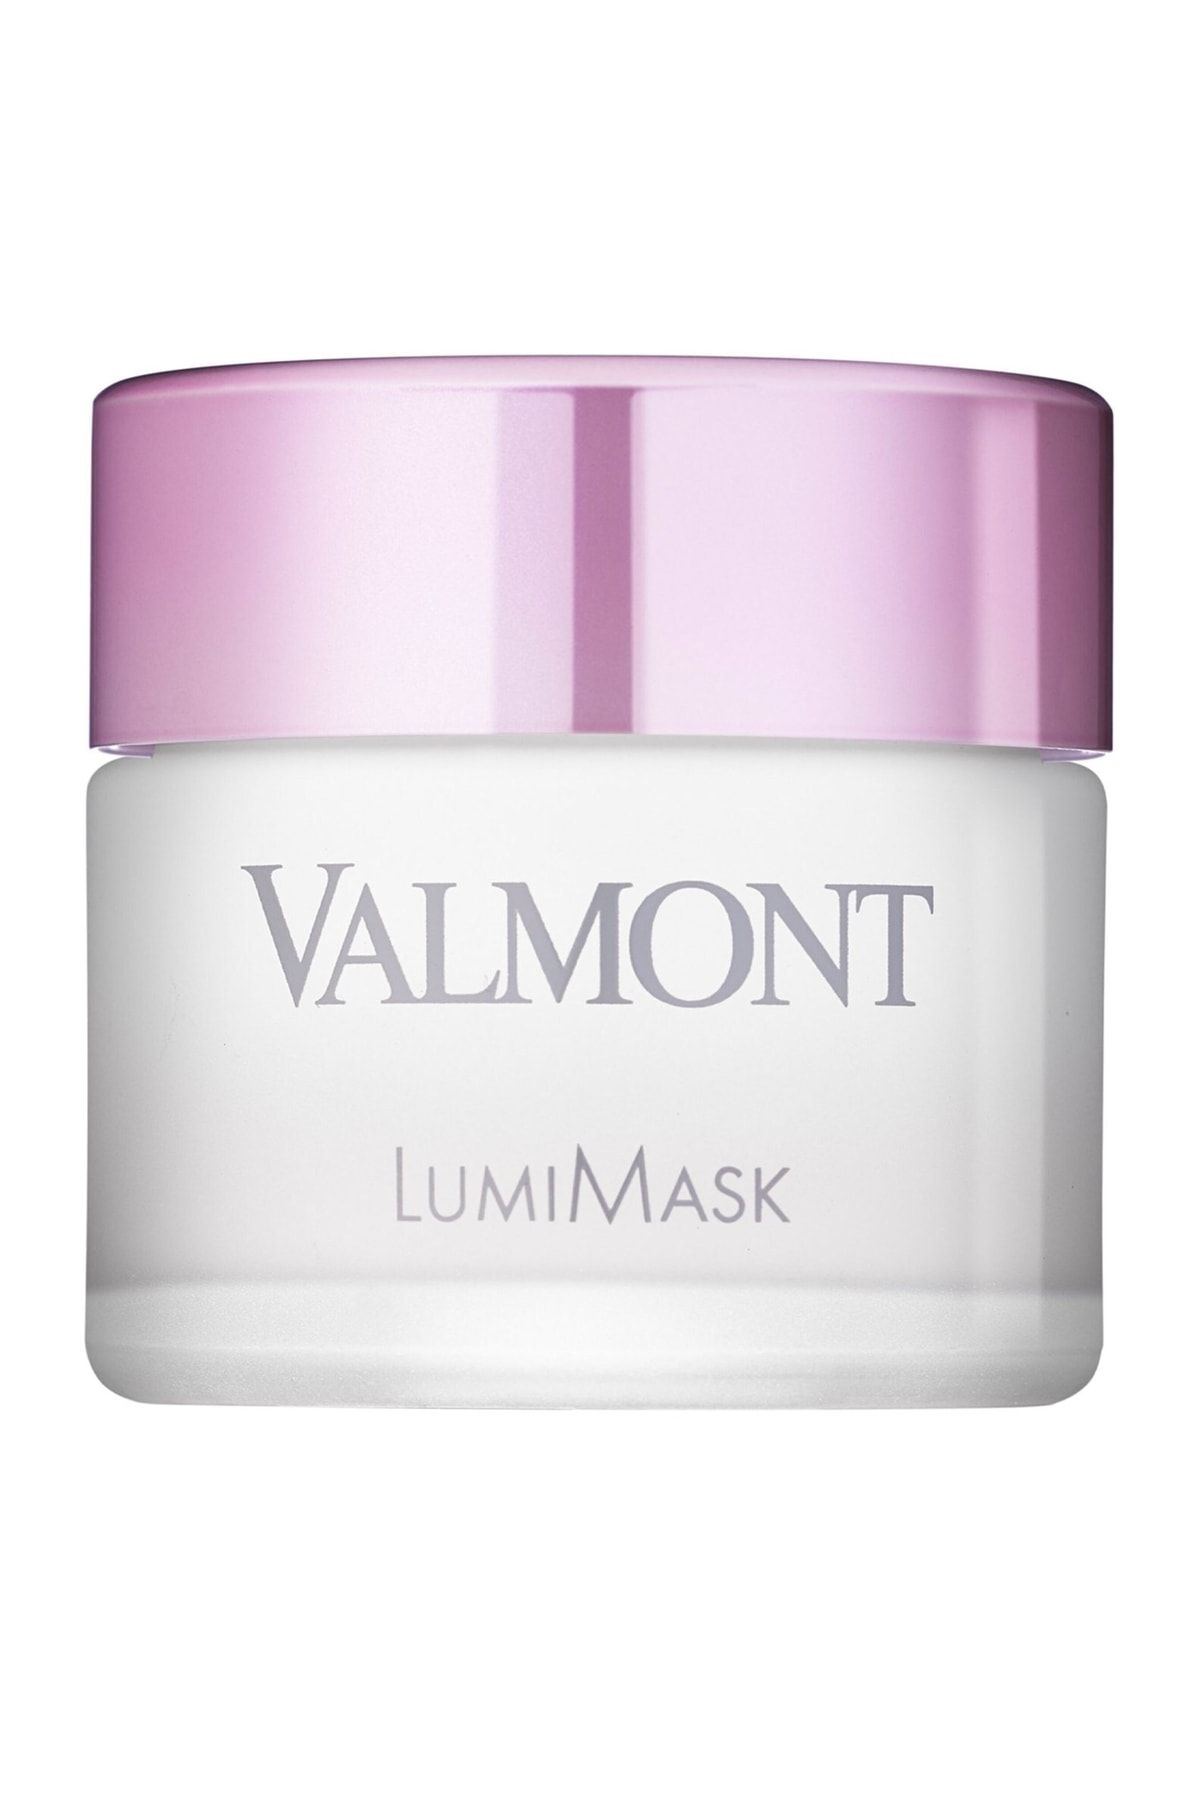 Valmont Lumimask Luminosity Maske 50ml.